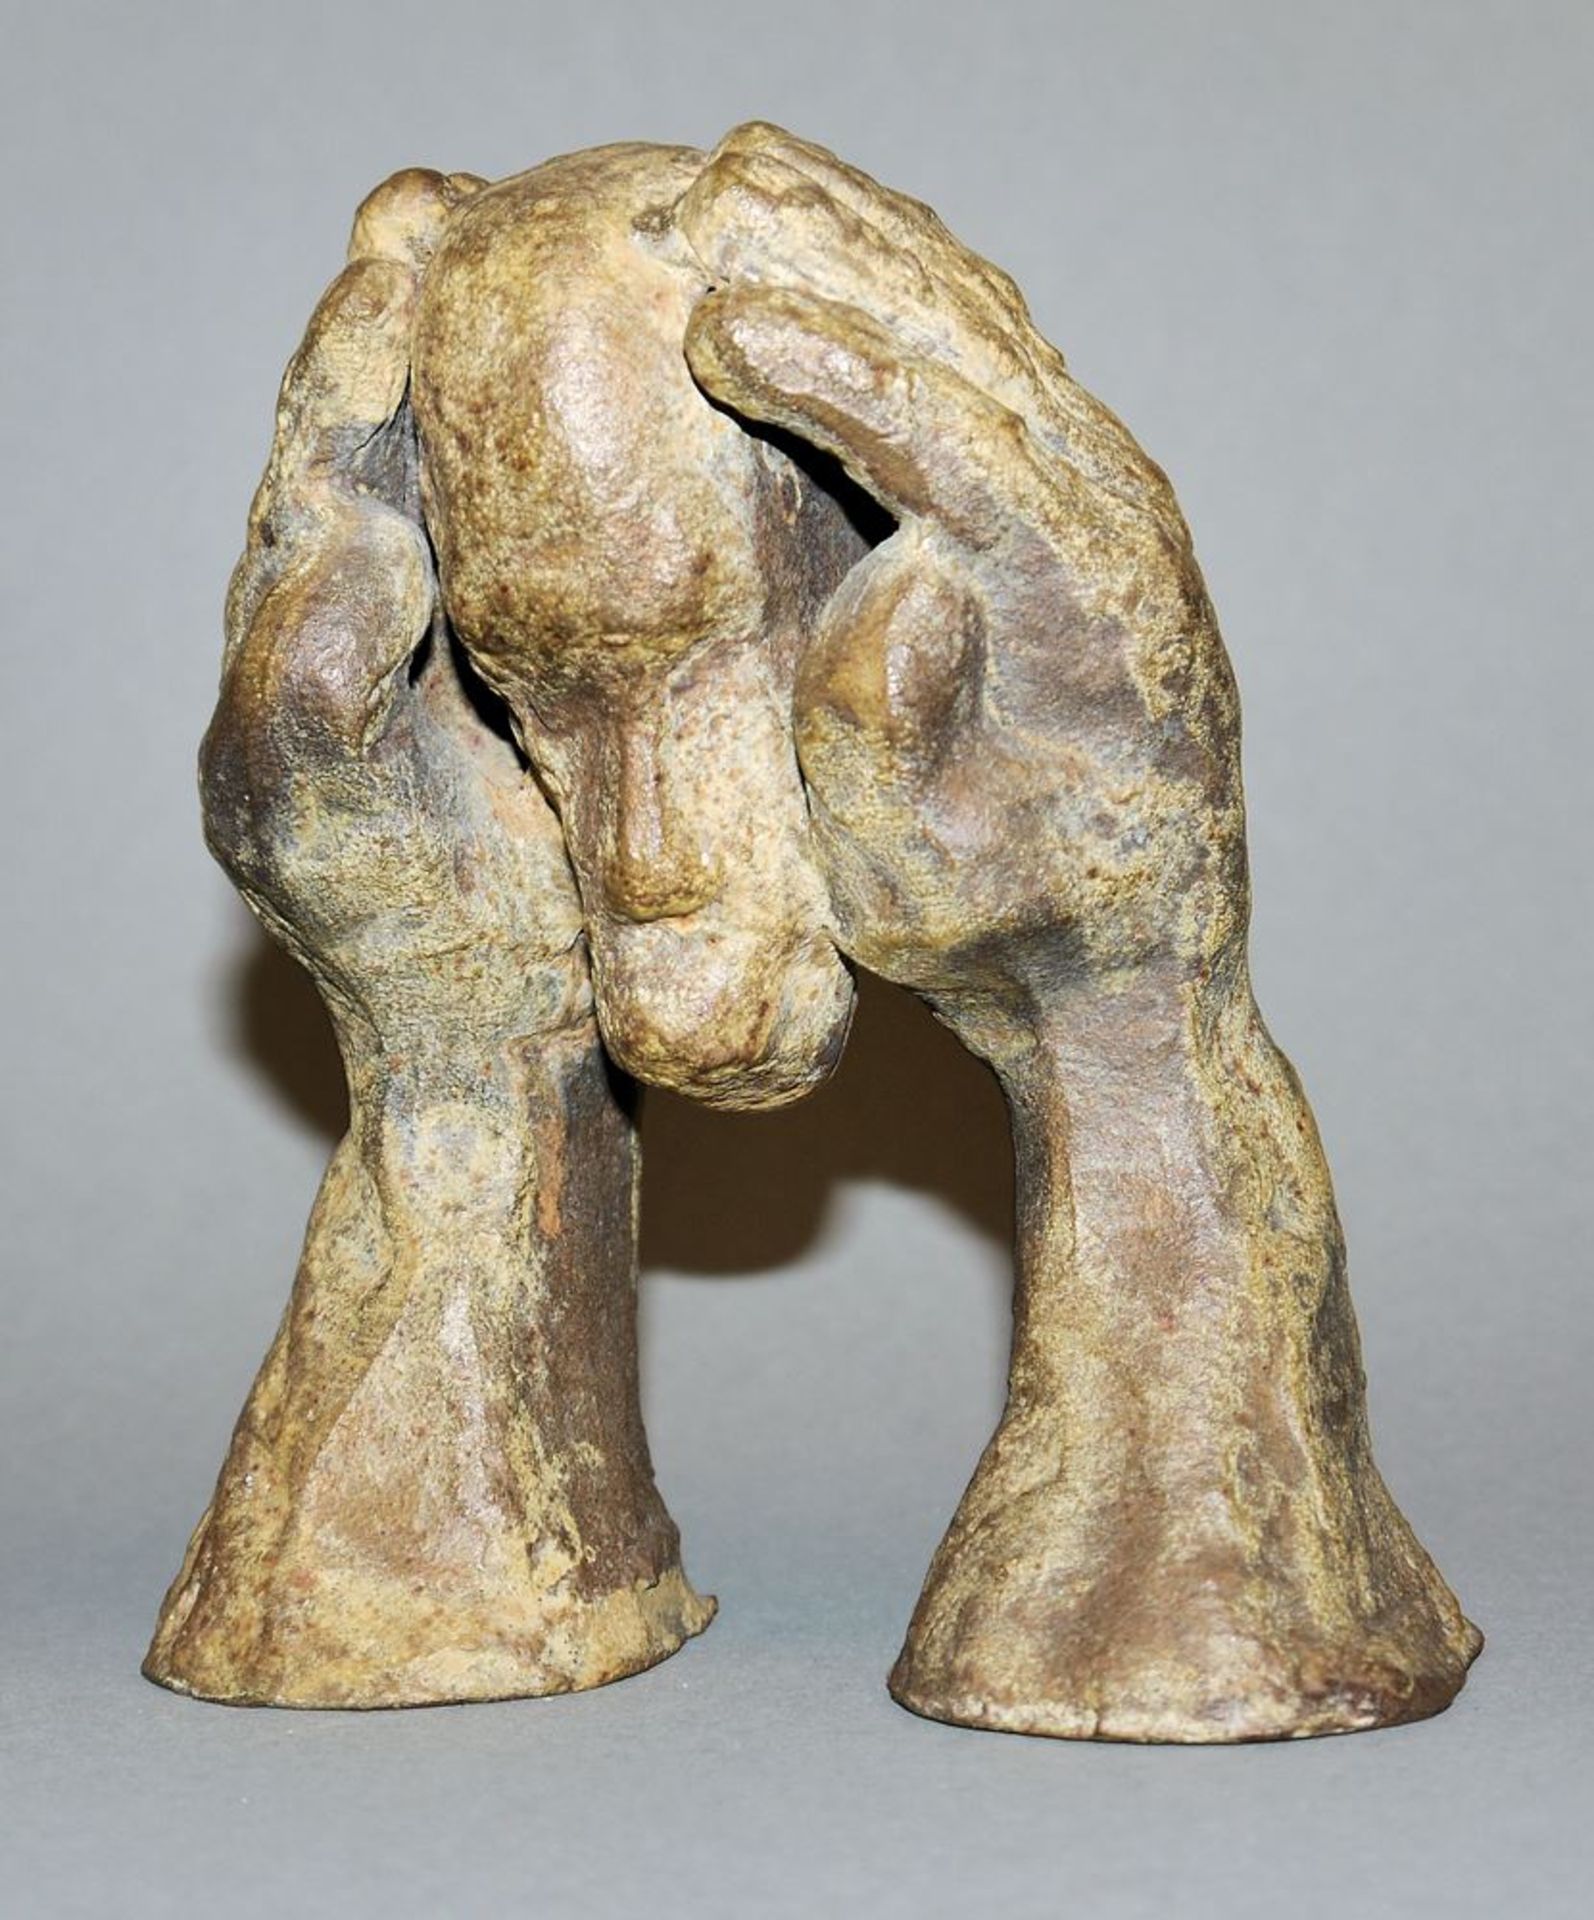 Dieter W. Meding, bronze sculpture "Cogito" from 1991